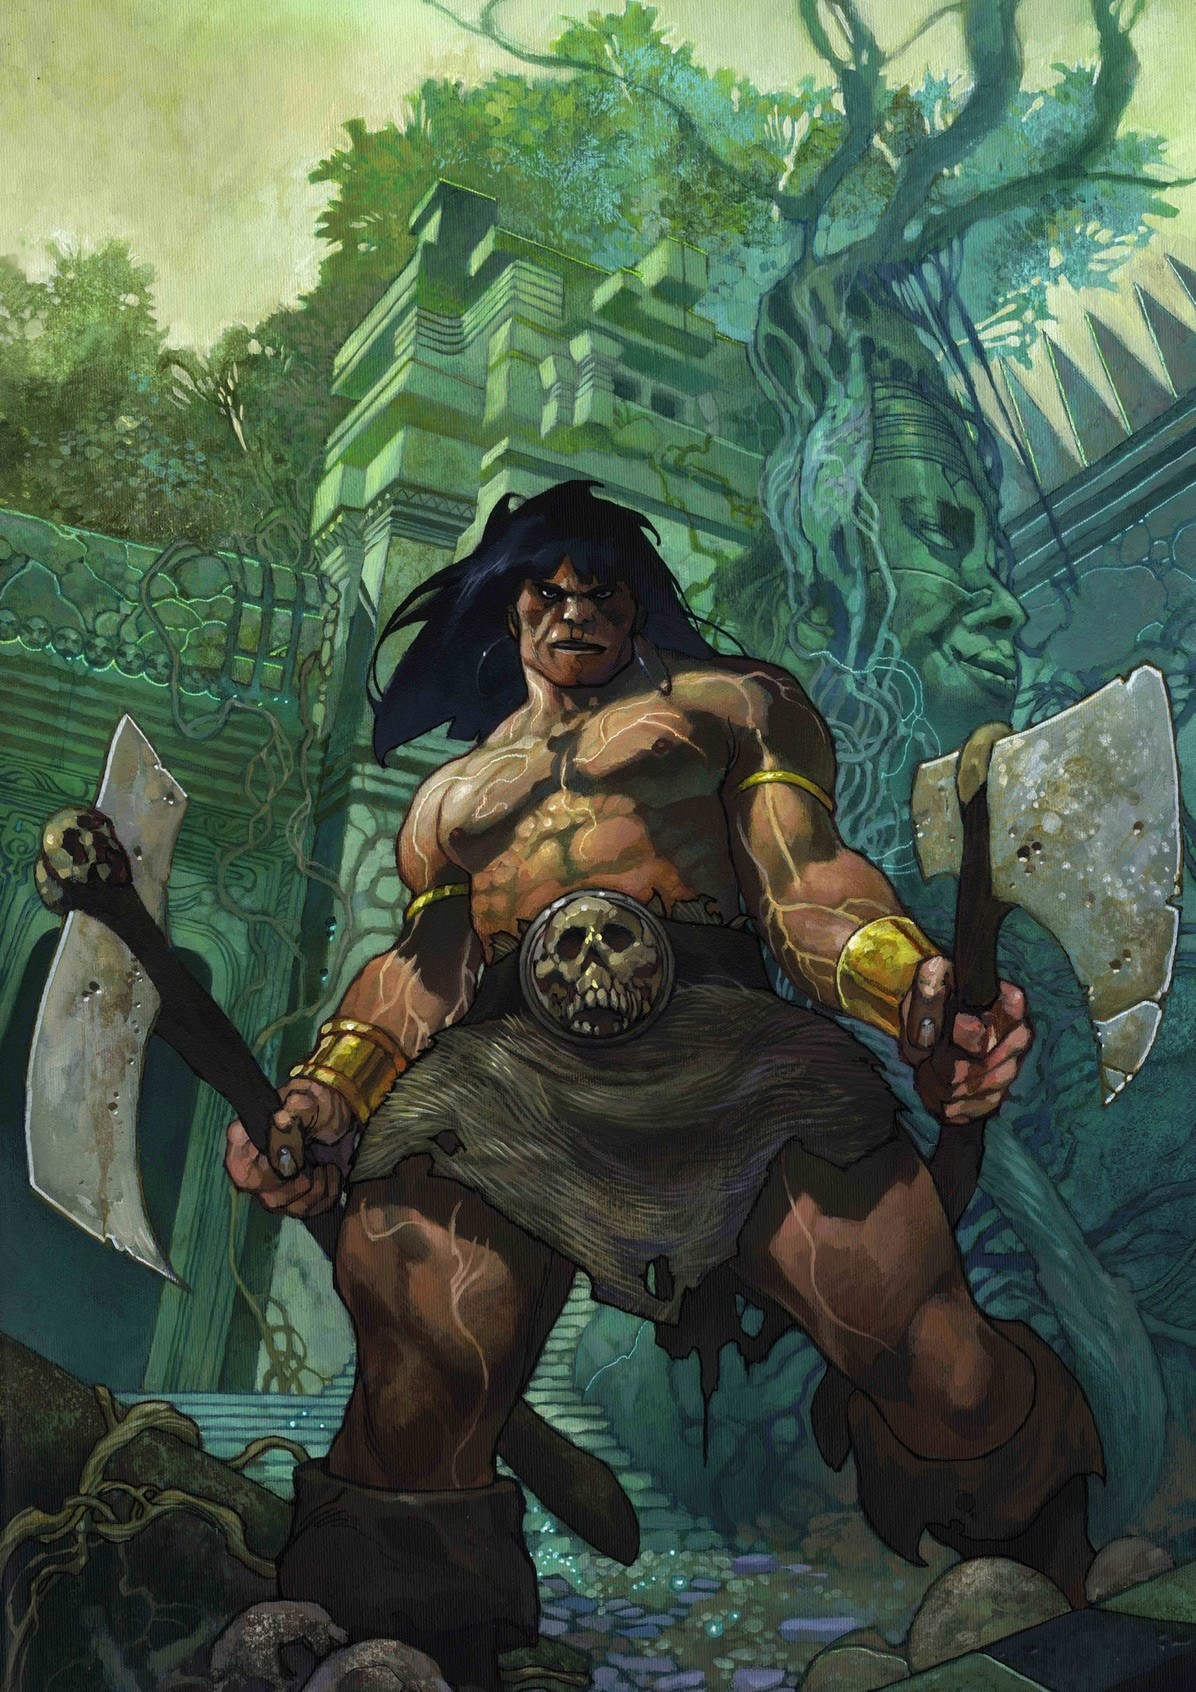 The Savage Sword of Conan Vol II